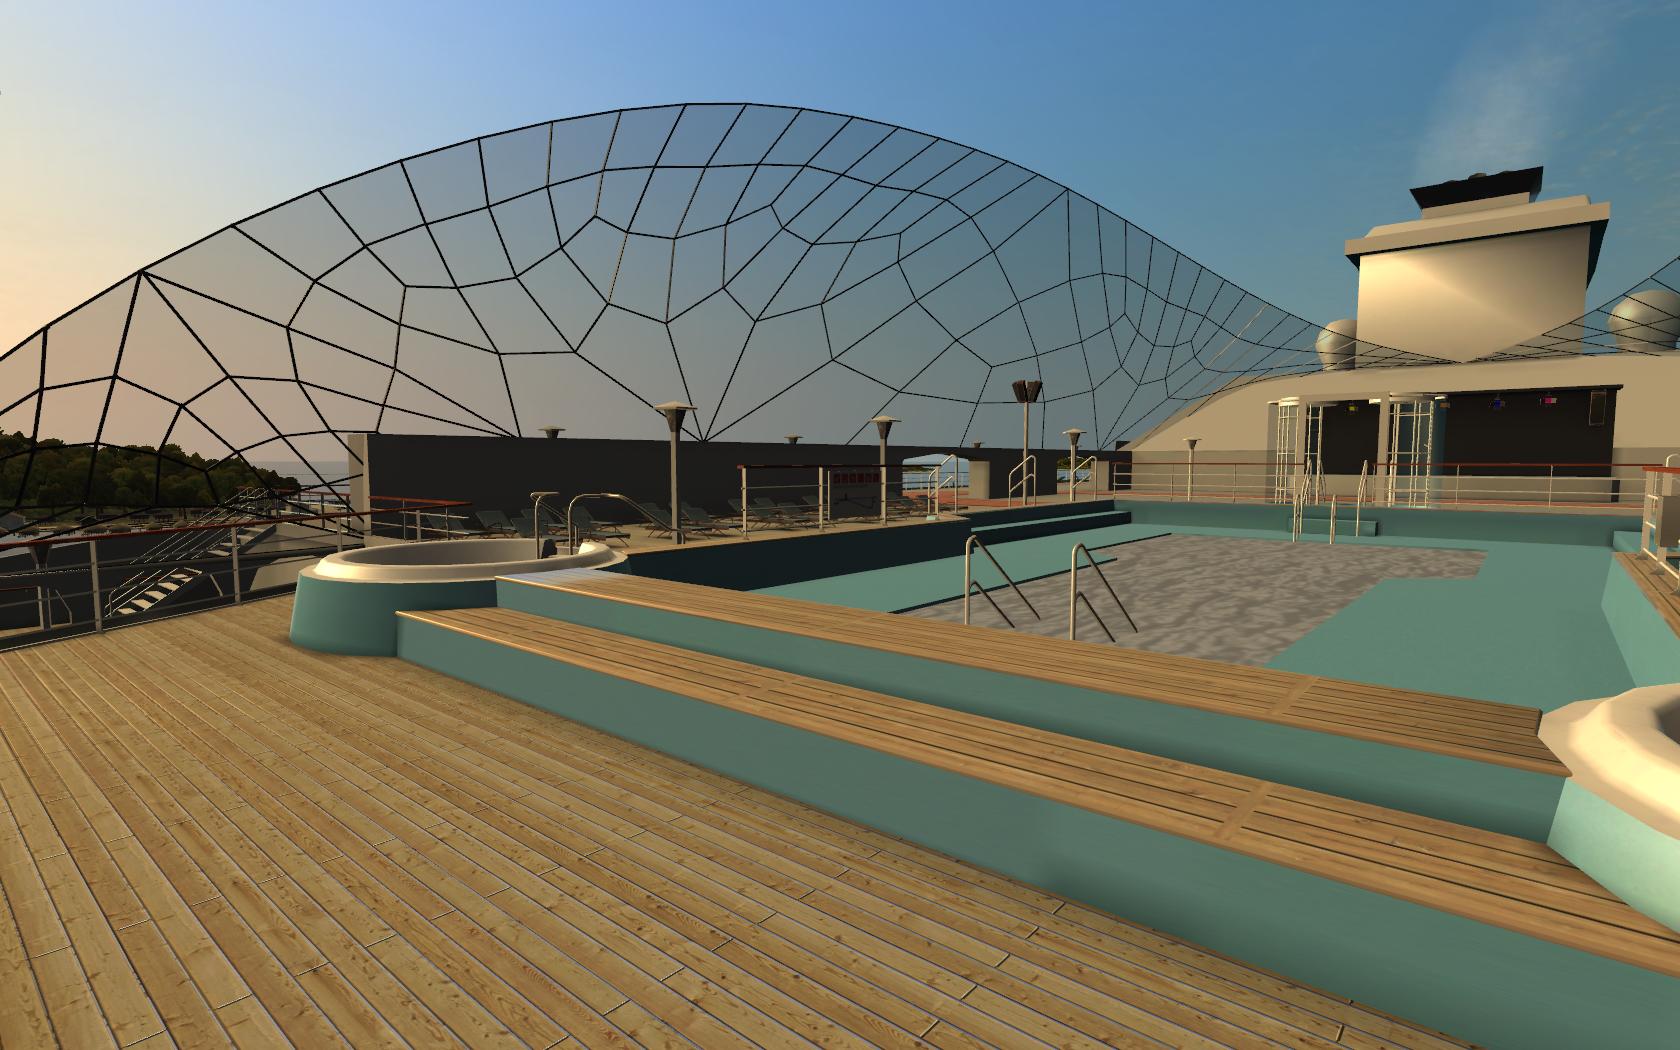 Ship Simulator Extremes: Ocean Cruise Ship screenshot